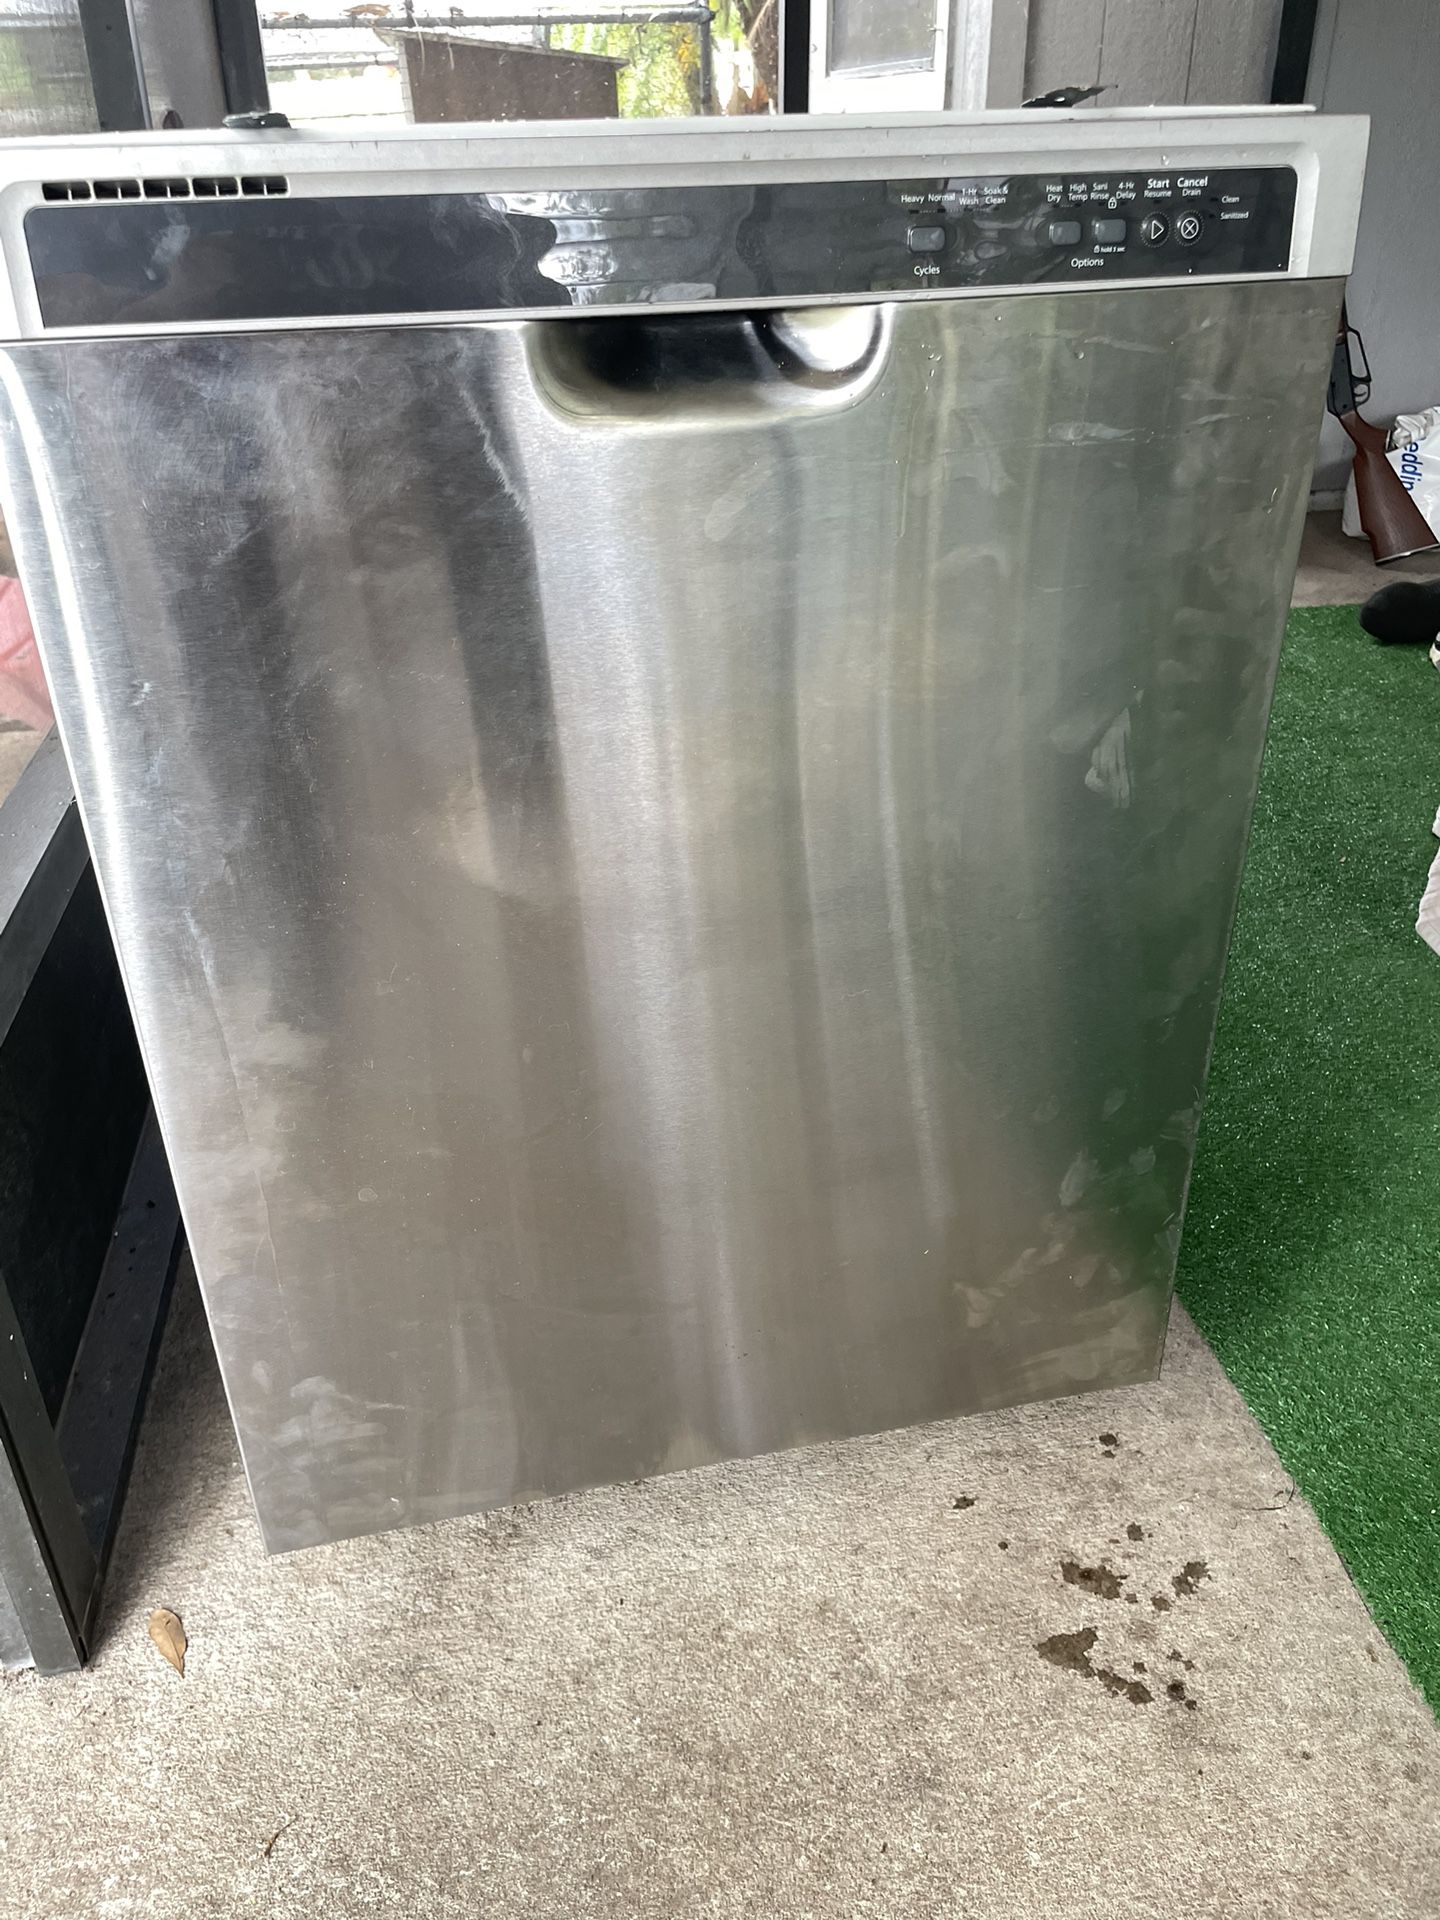 Stainless Steel Dishwasher- Whirlpool 